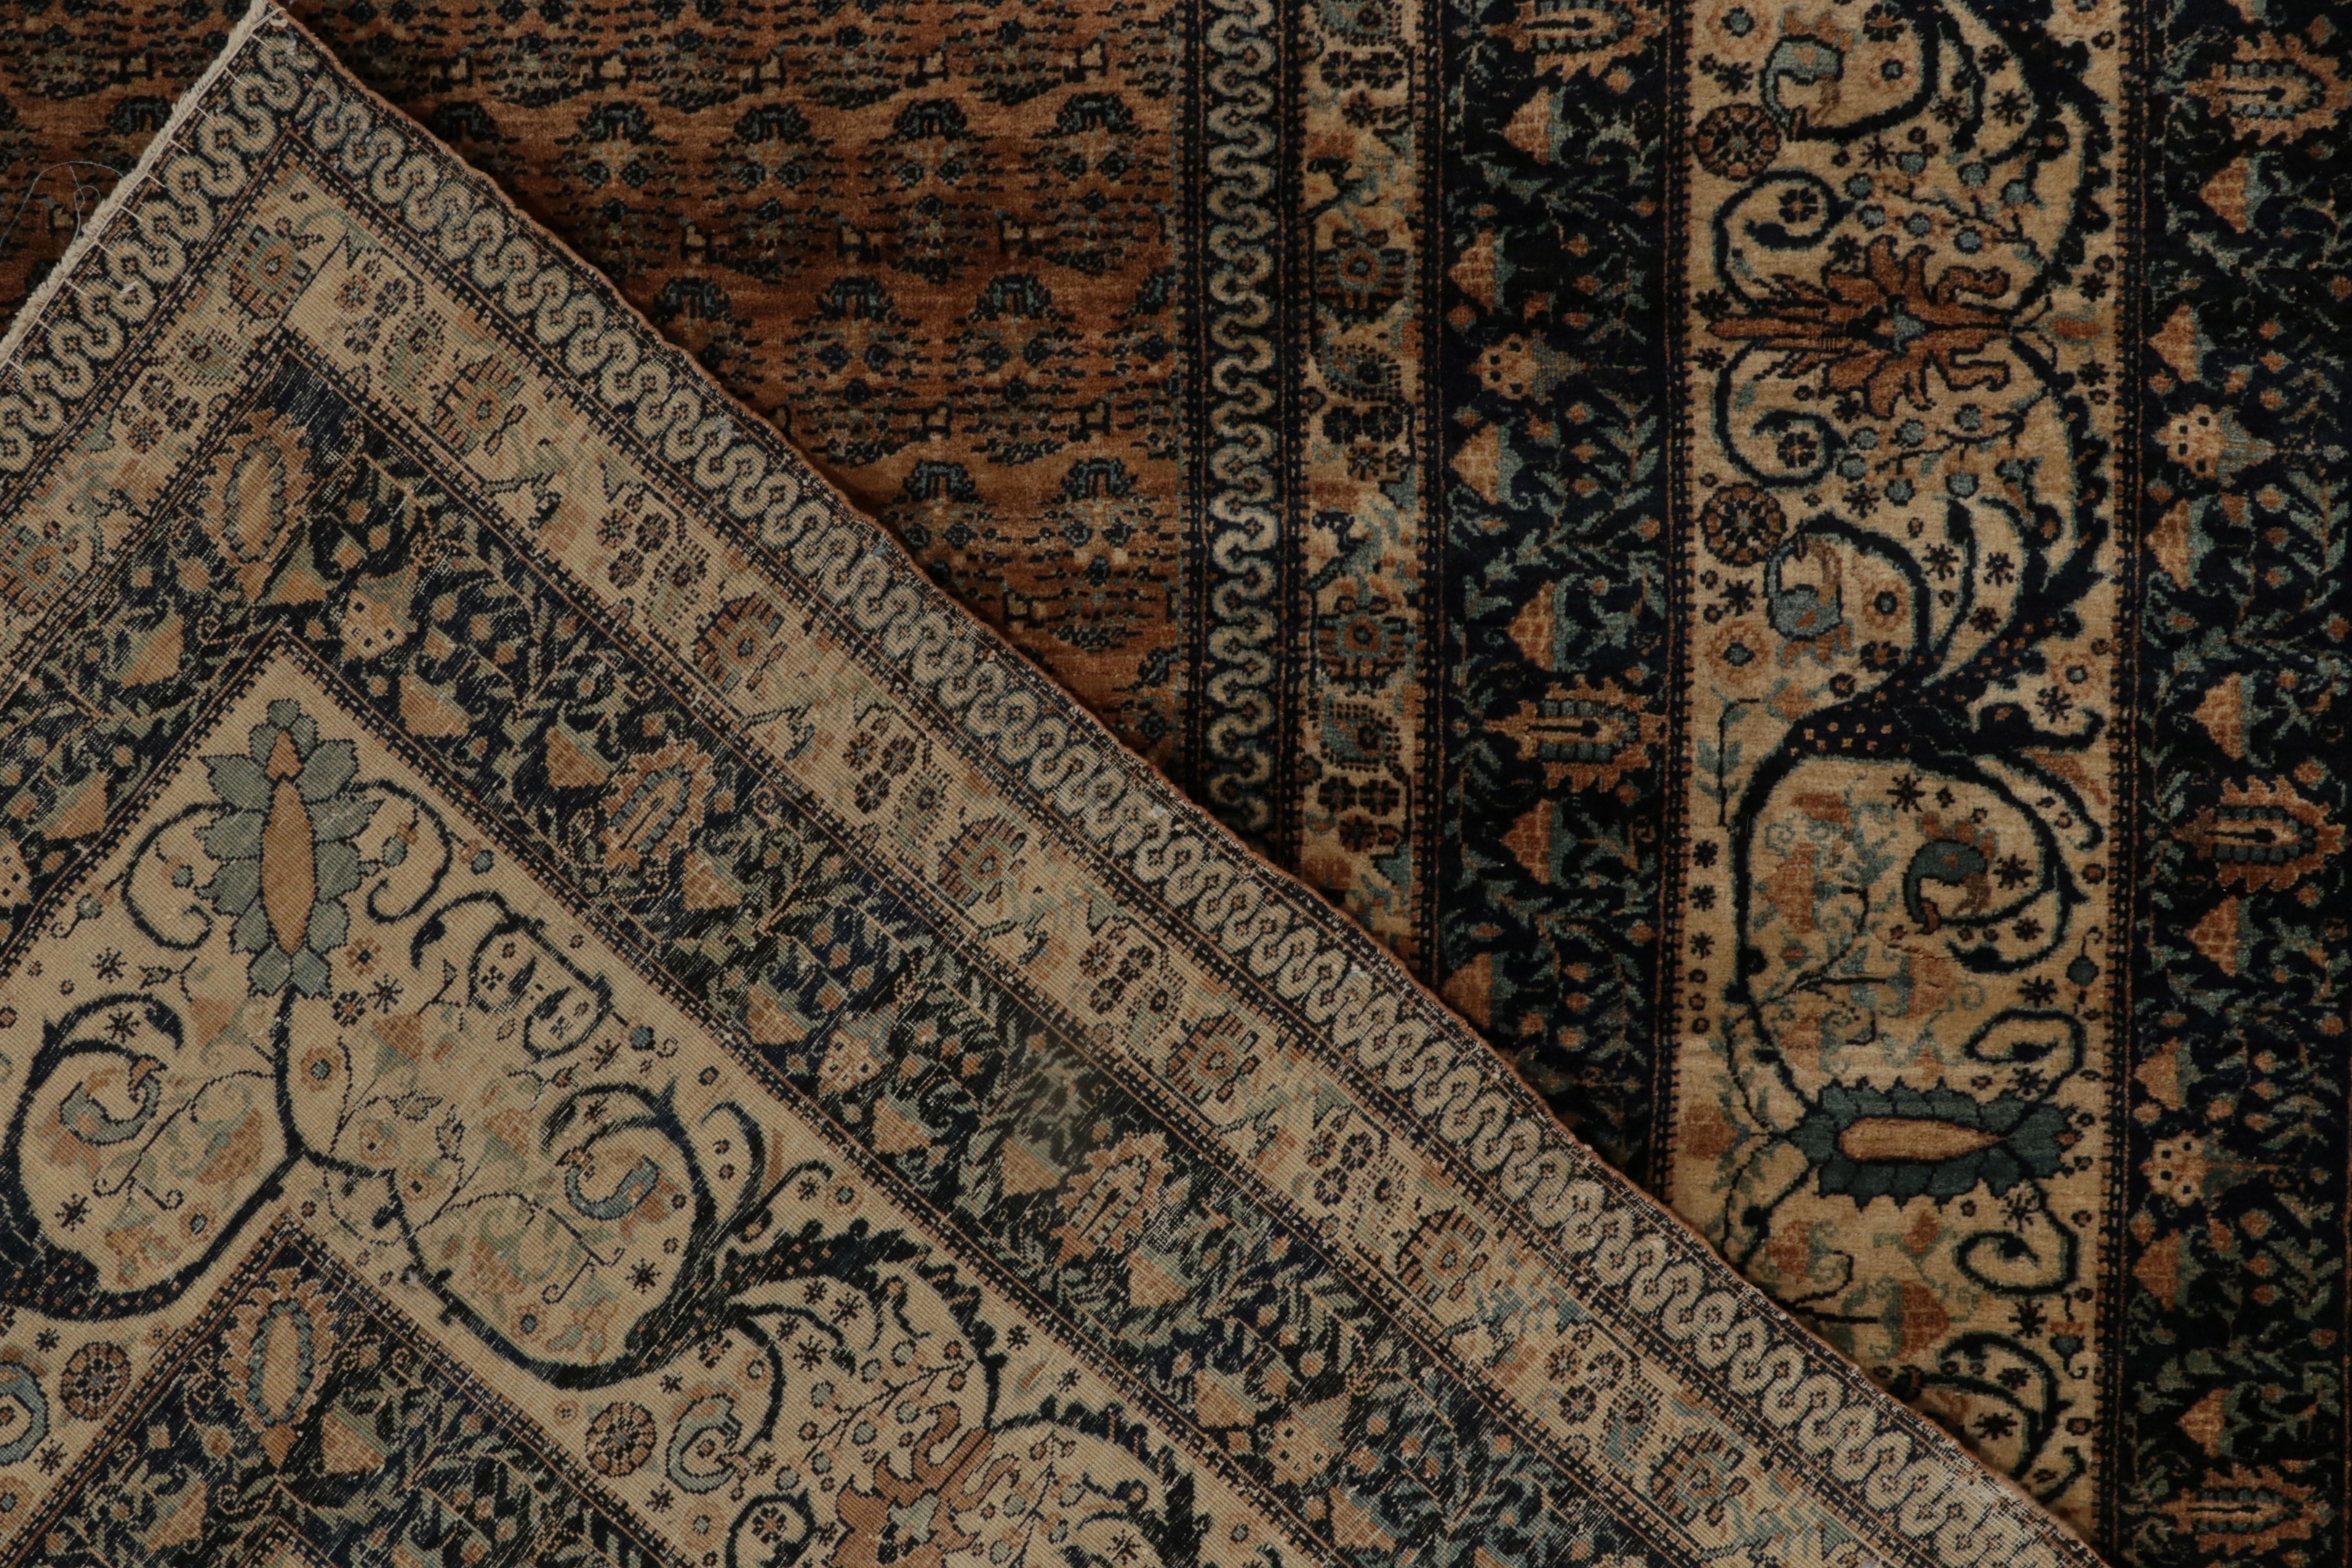 Early 20th Century Antique Tabriz rug in Beige-Brown, Black & Blue Floral Border by Rug & Kilim For Sale